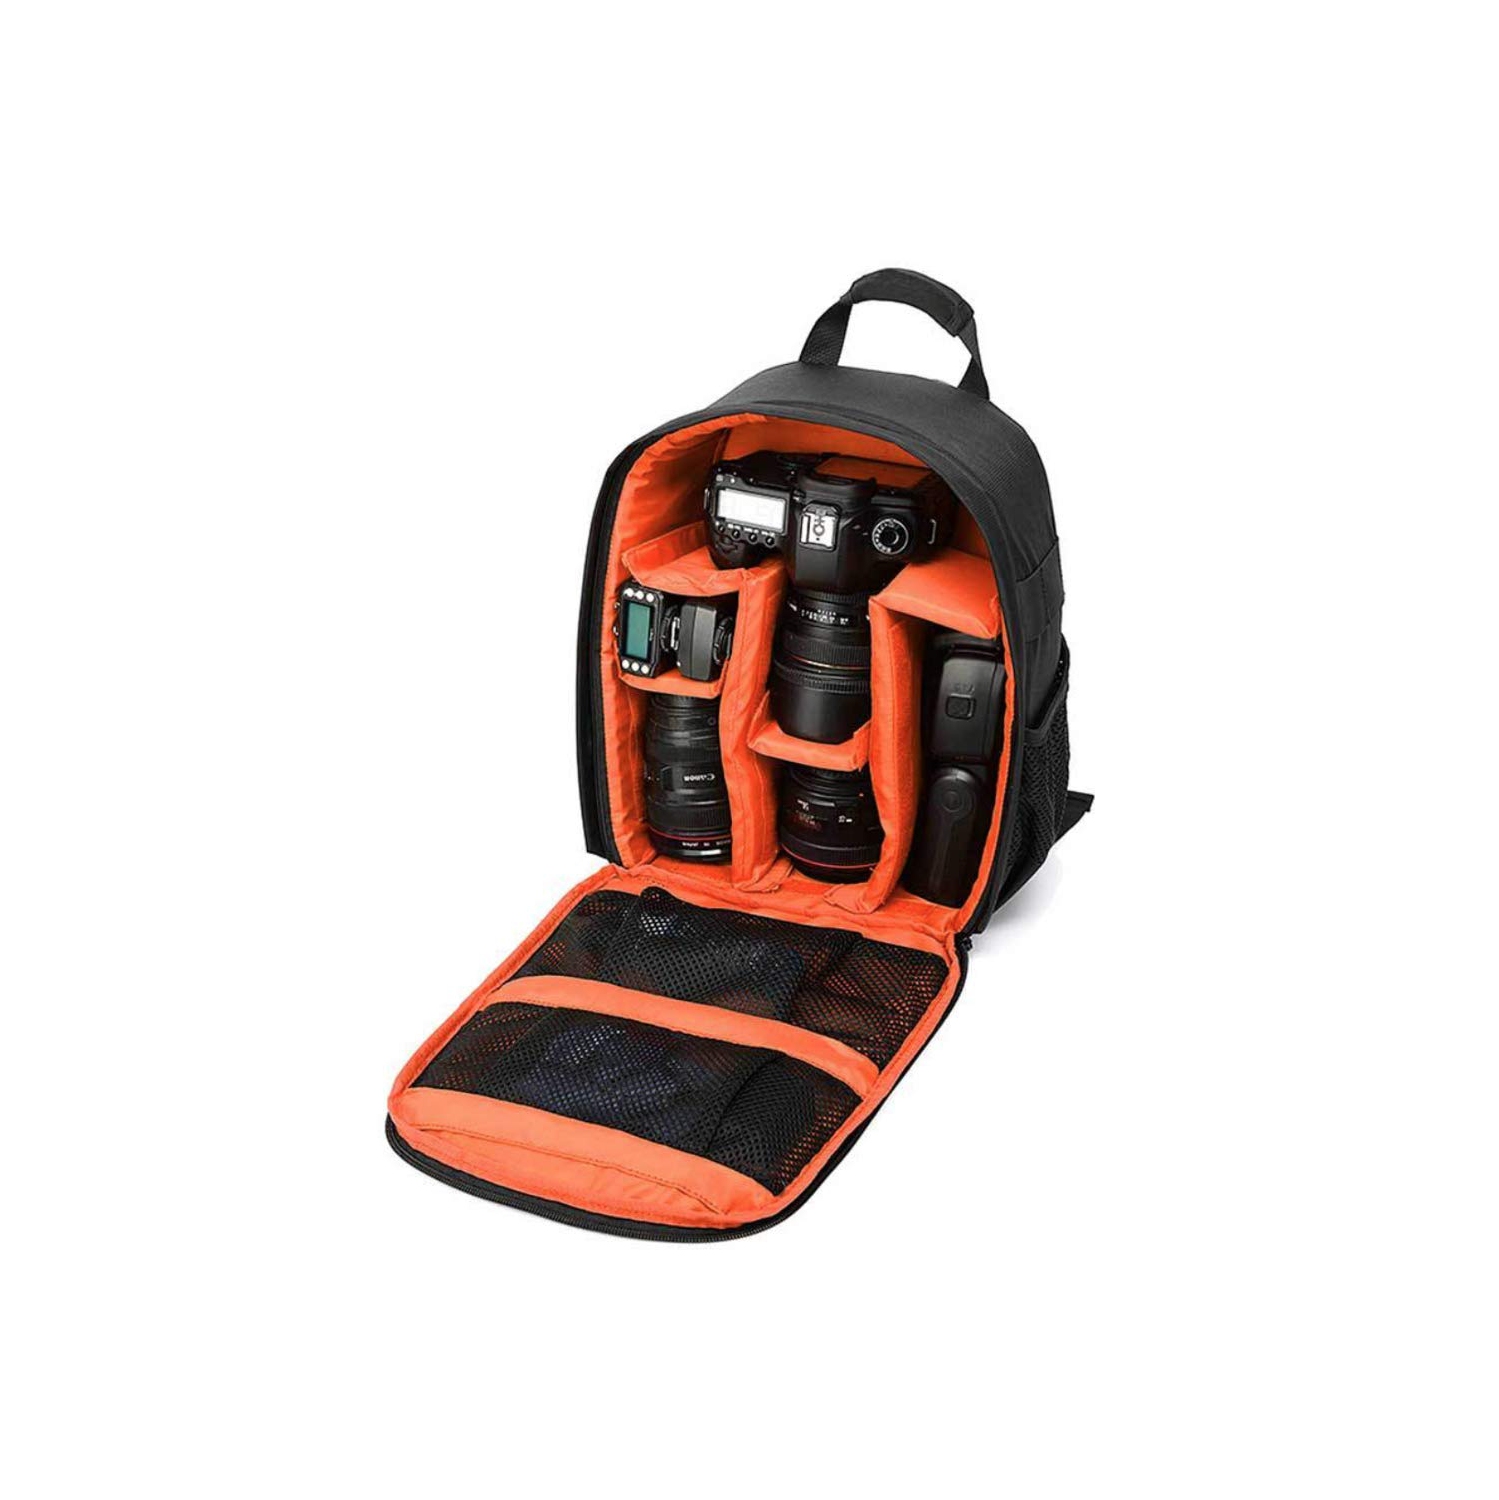 Camera Backpack Bag, Waterproof Professional DSLR/SLR Mirrorless Camera Case Compatible for Sony Canon Nikon Lens (Orange)